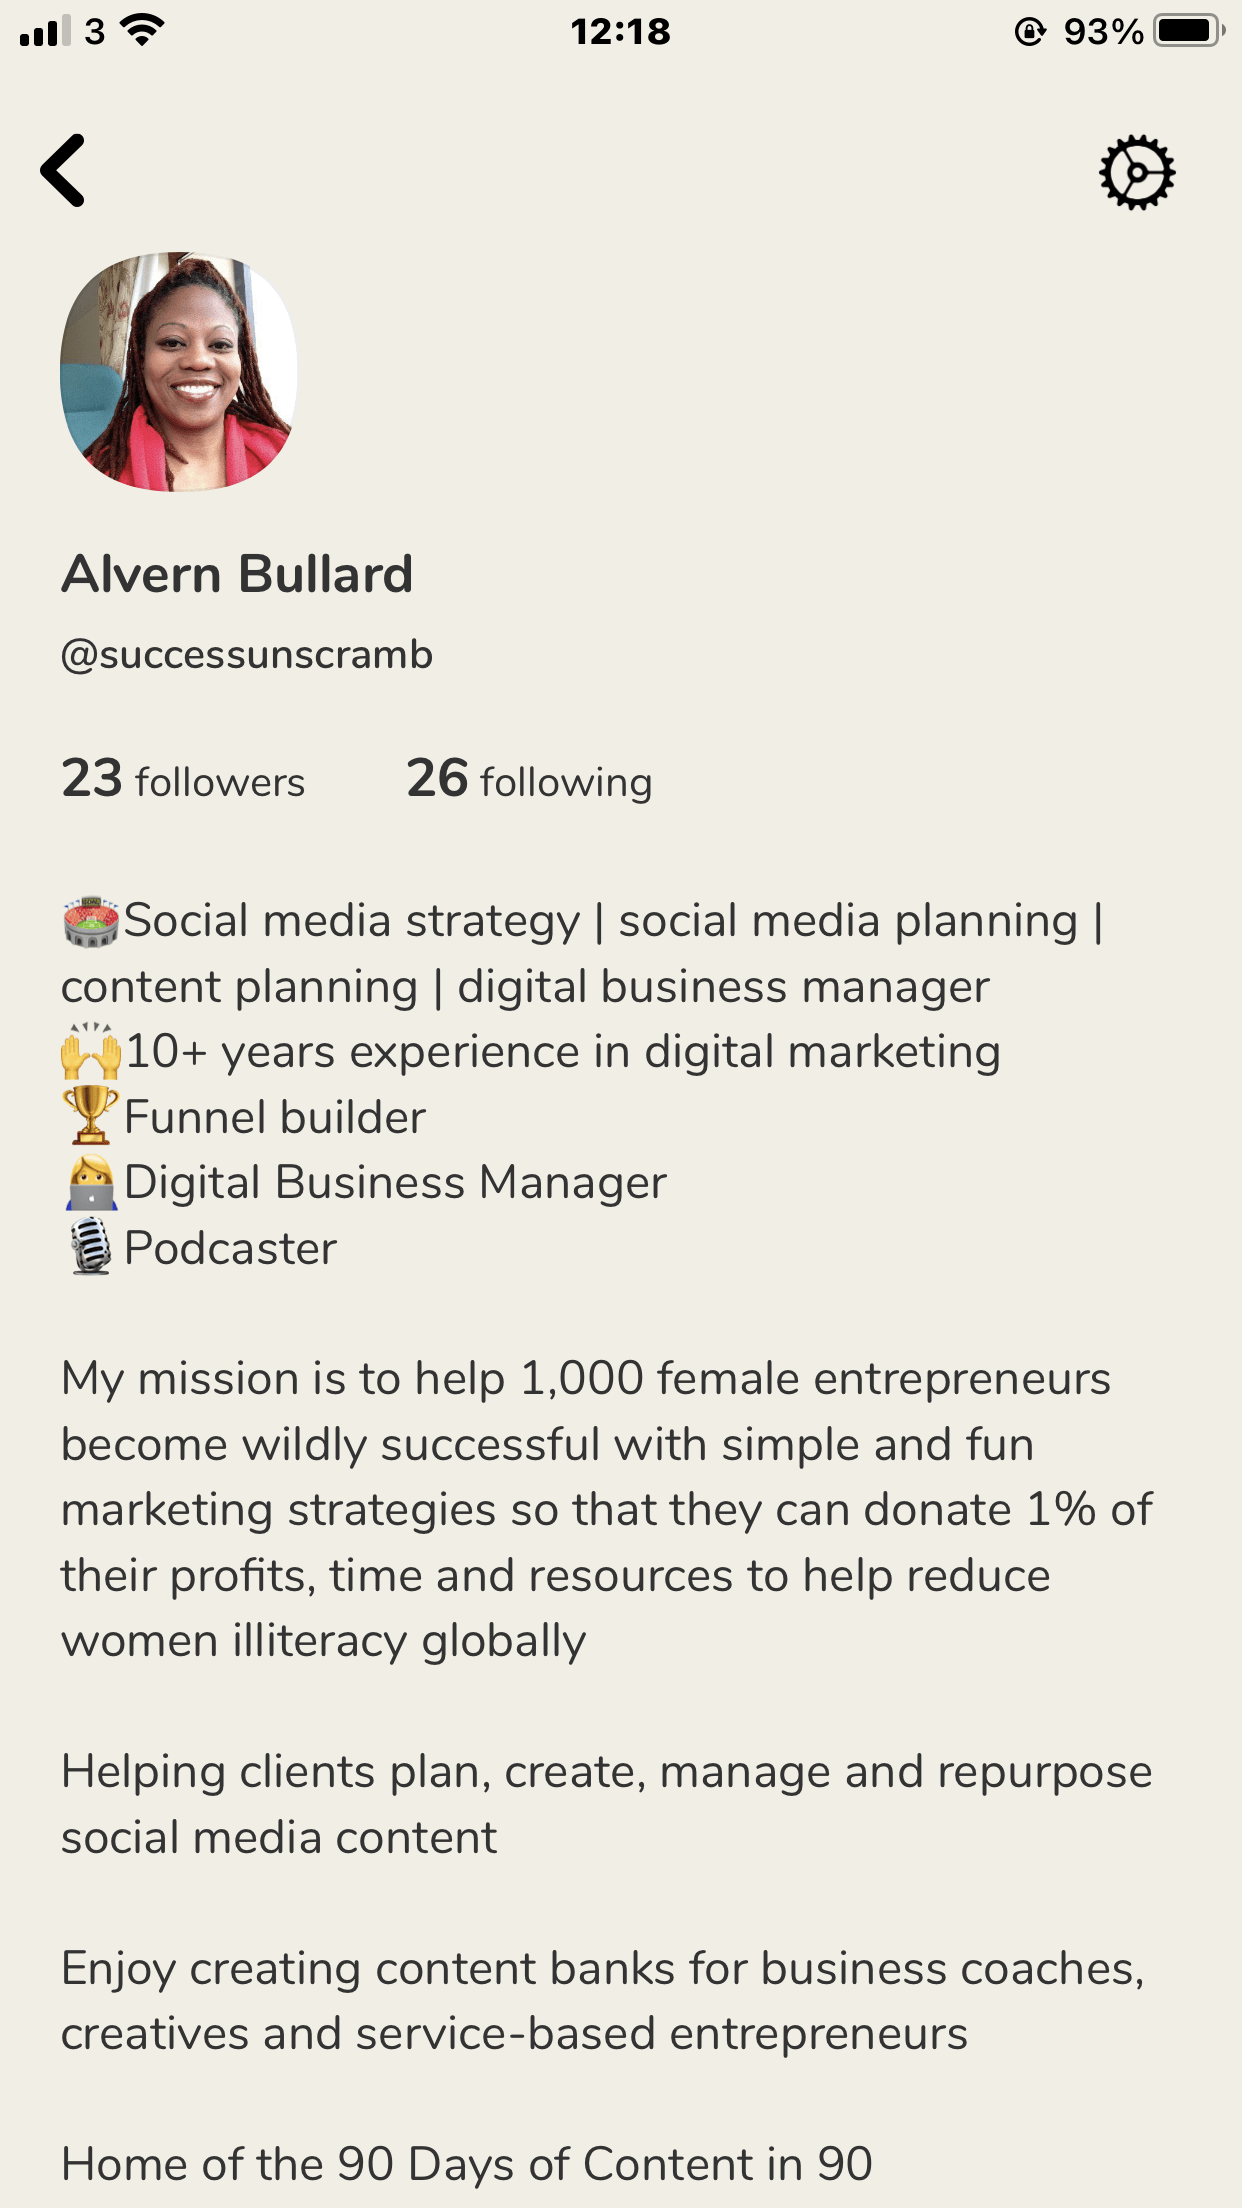 Profile of Alvern Bullard from Success Unscrumbled